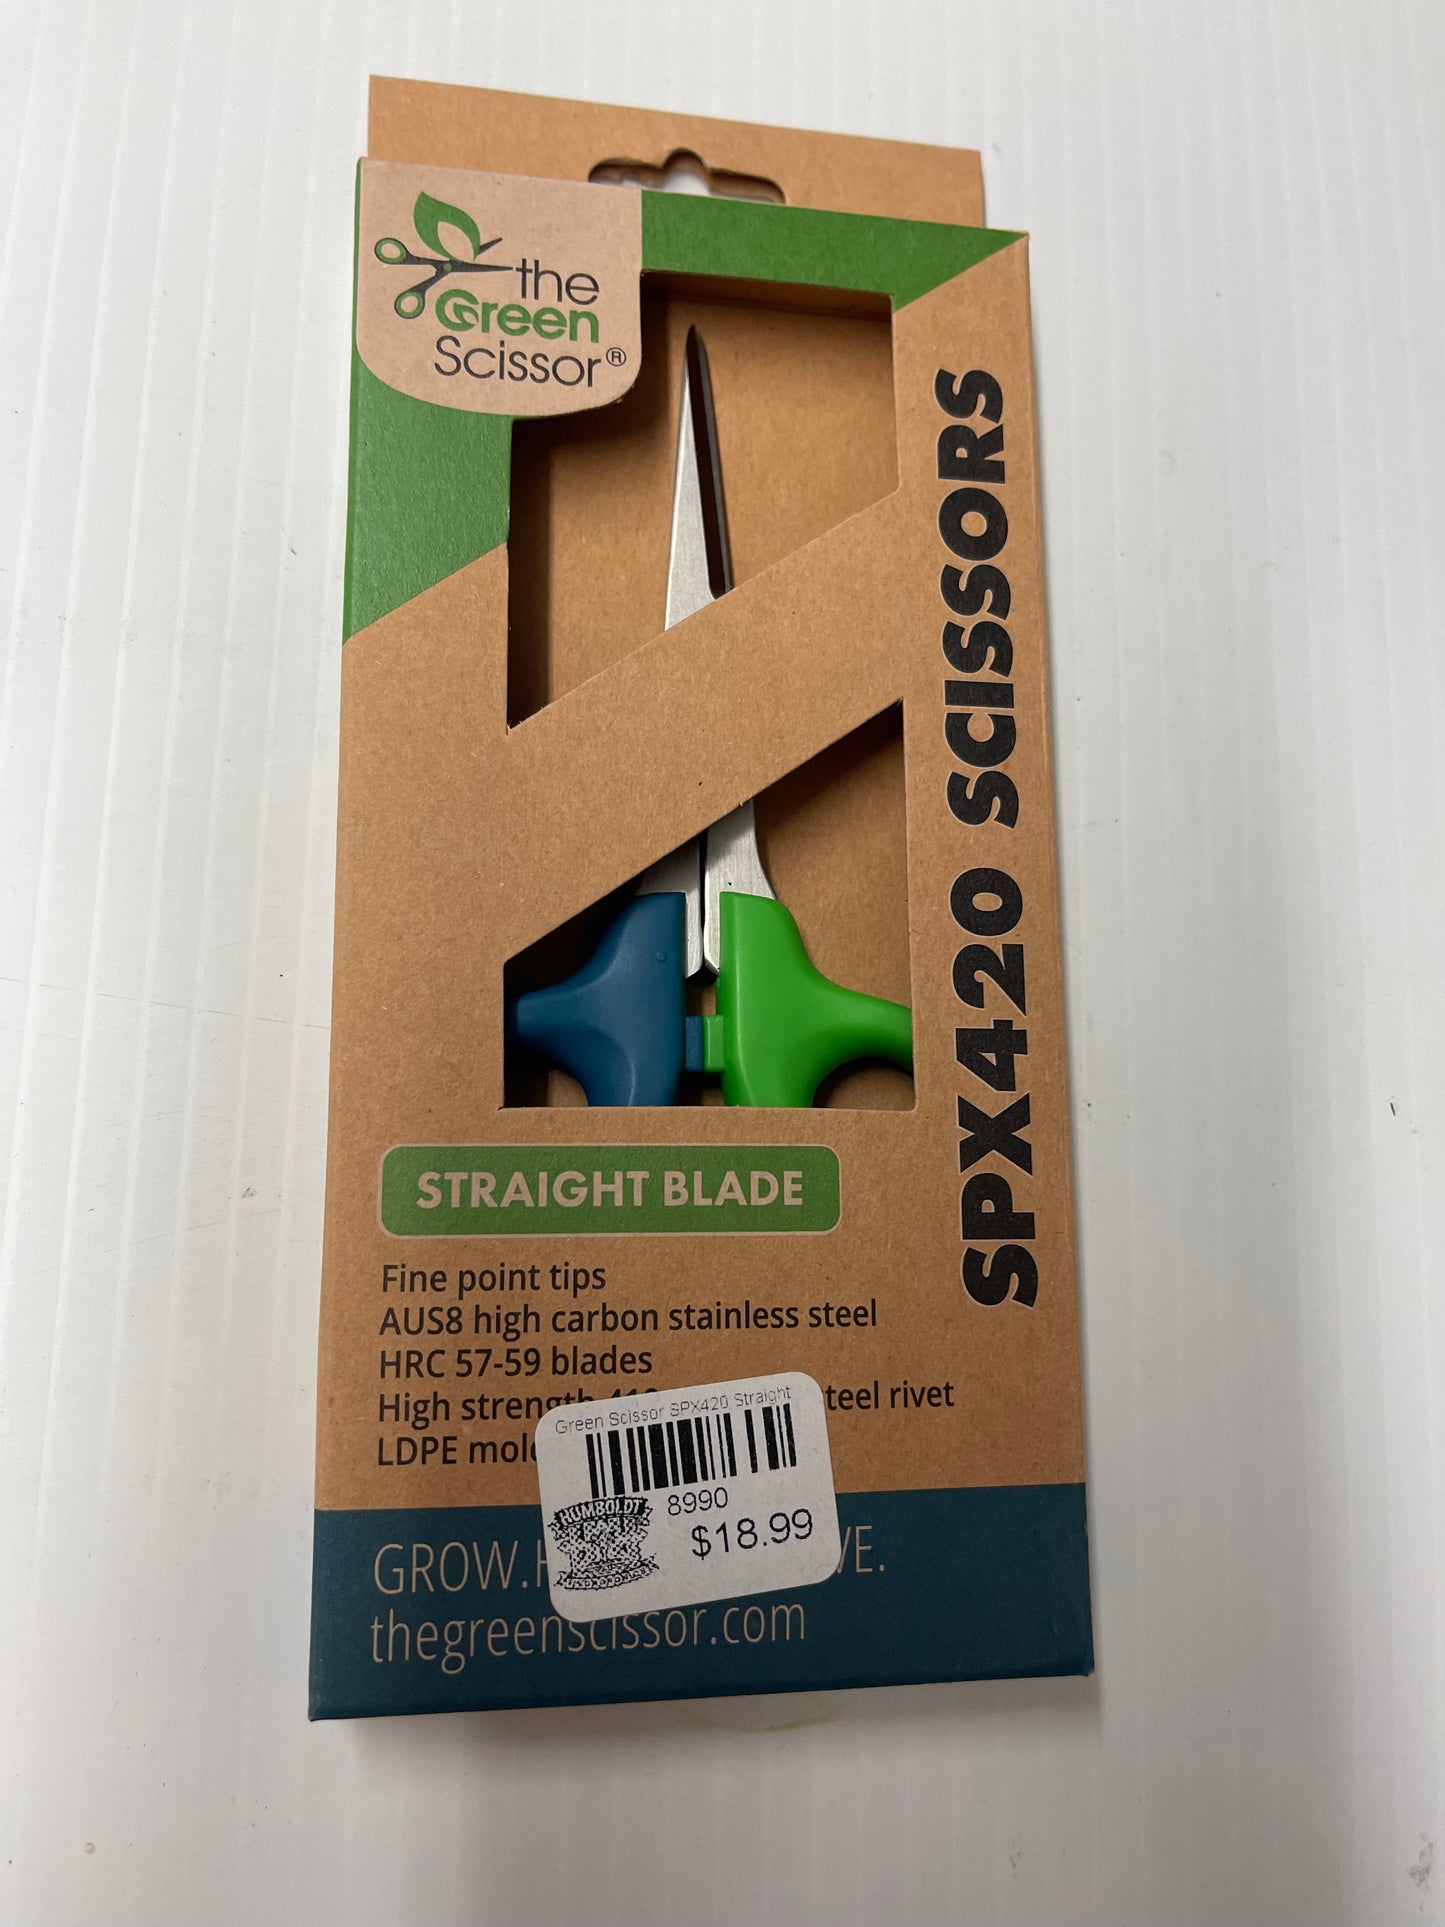 The Green Scissor SPX 420 Straight Blade Scissors